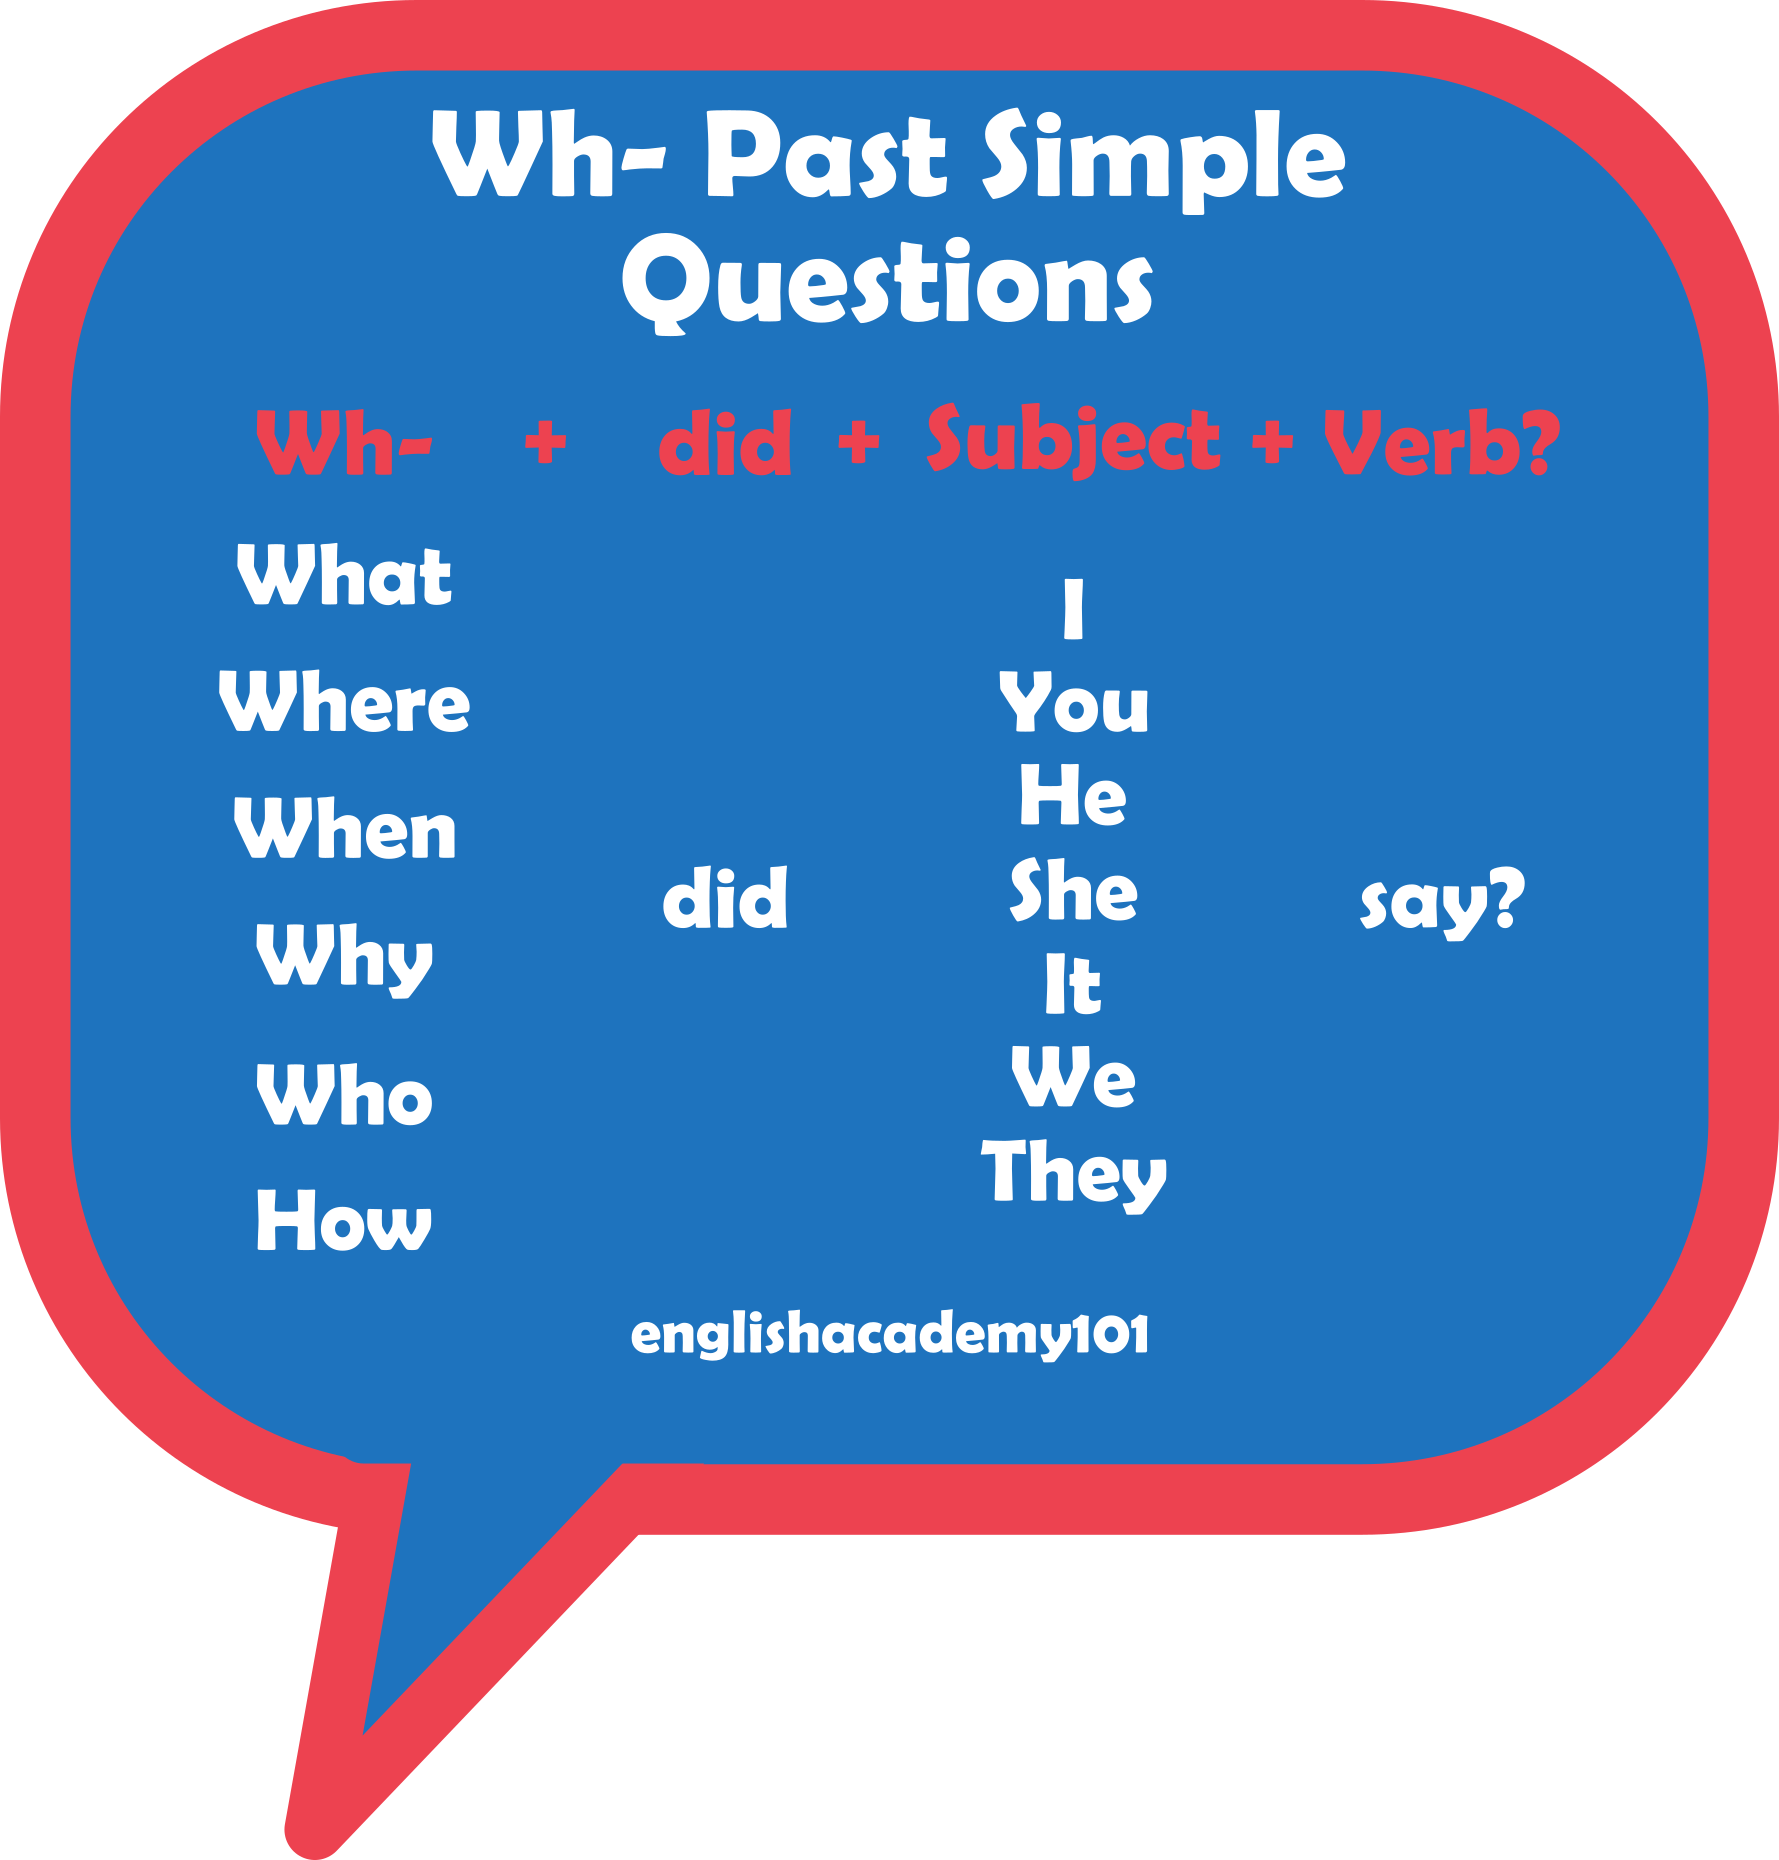 Ask в present simple. Past simple WH questions. WH questions in past simple. Questions in past simple. Past simple вопросы.